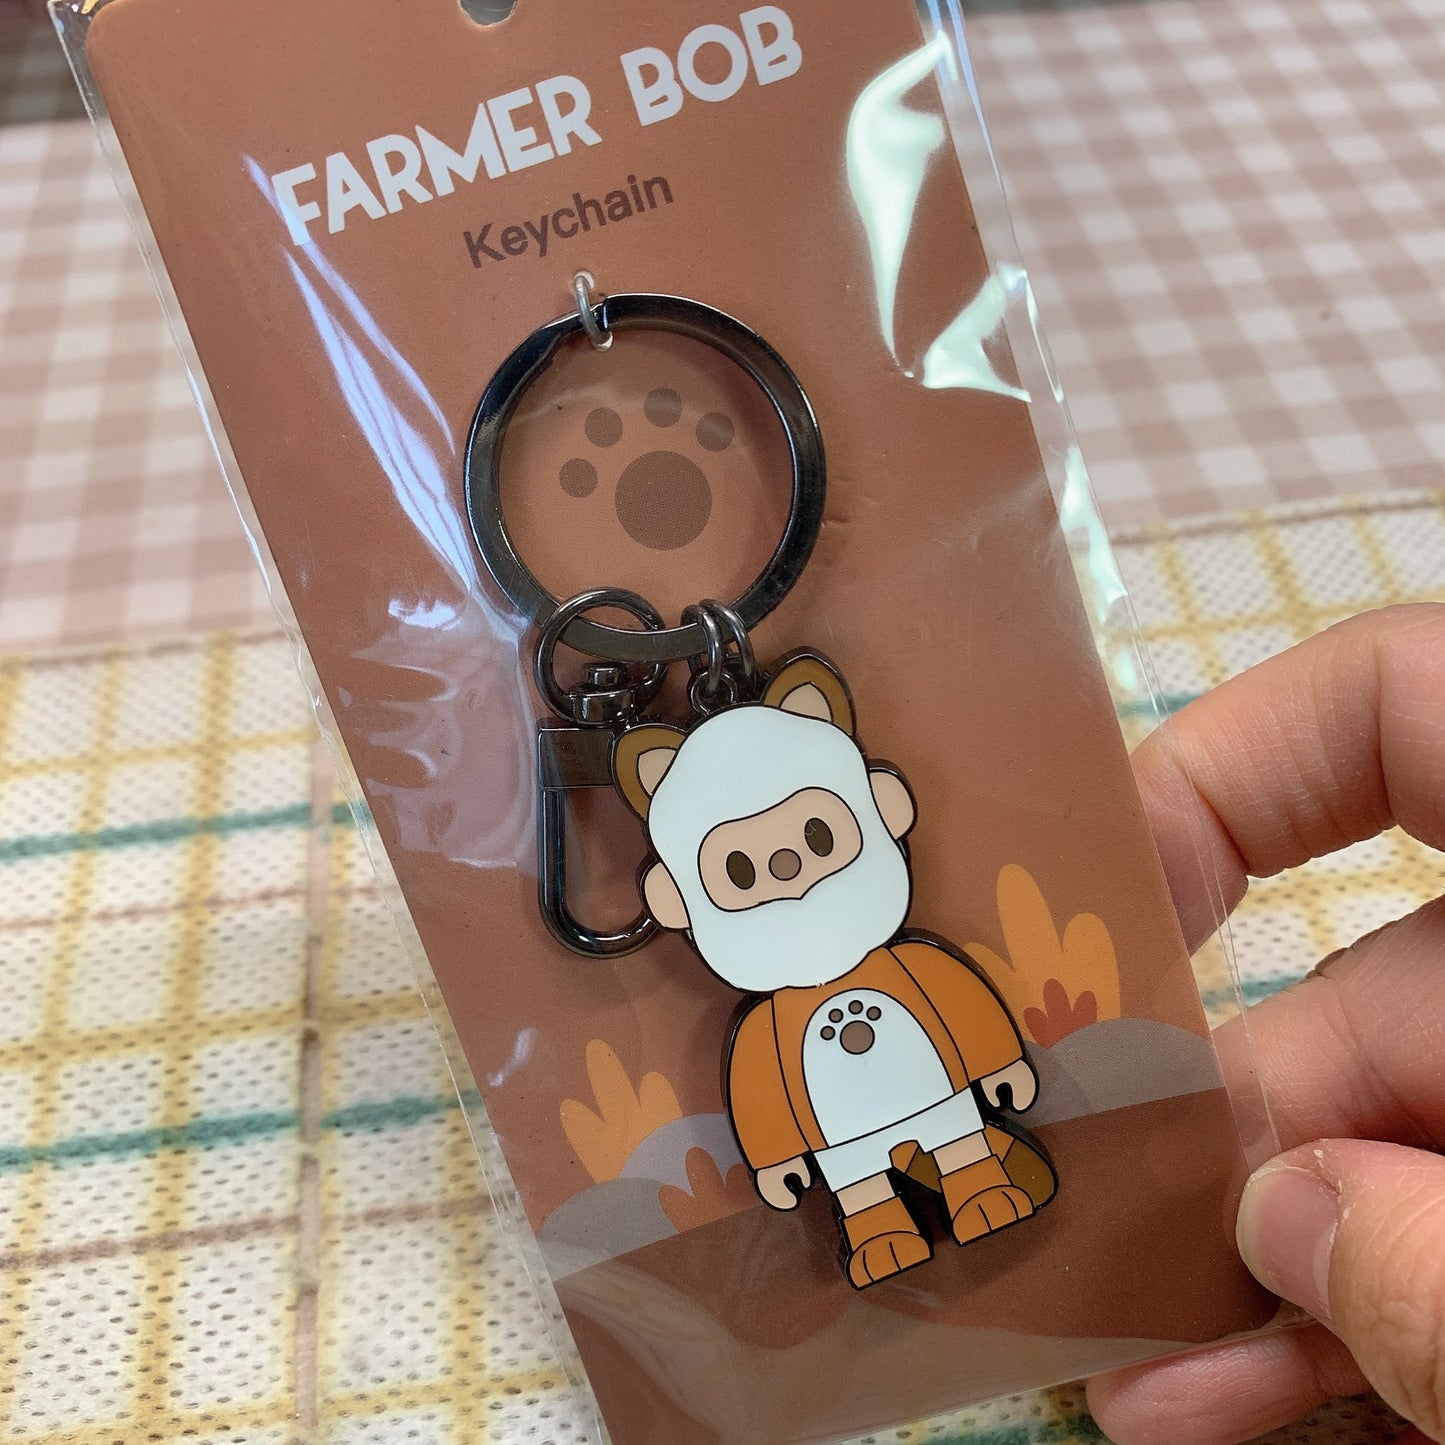 Farmer BOB keychain